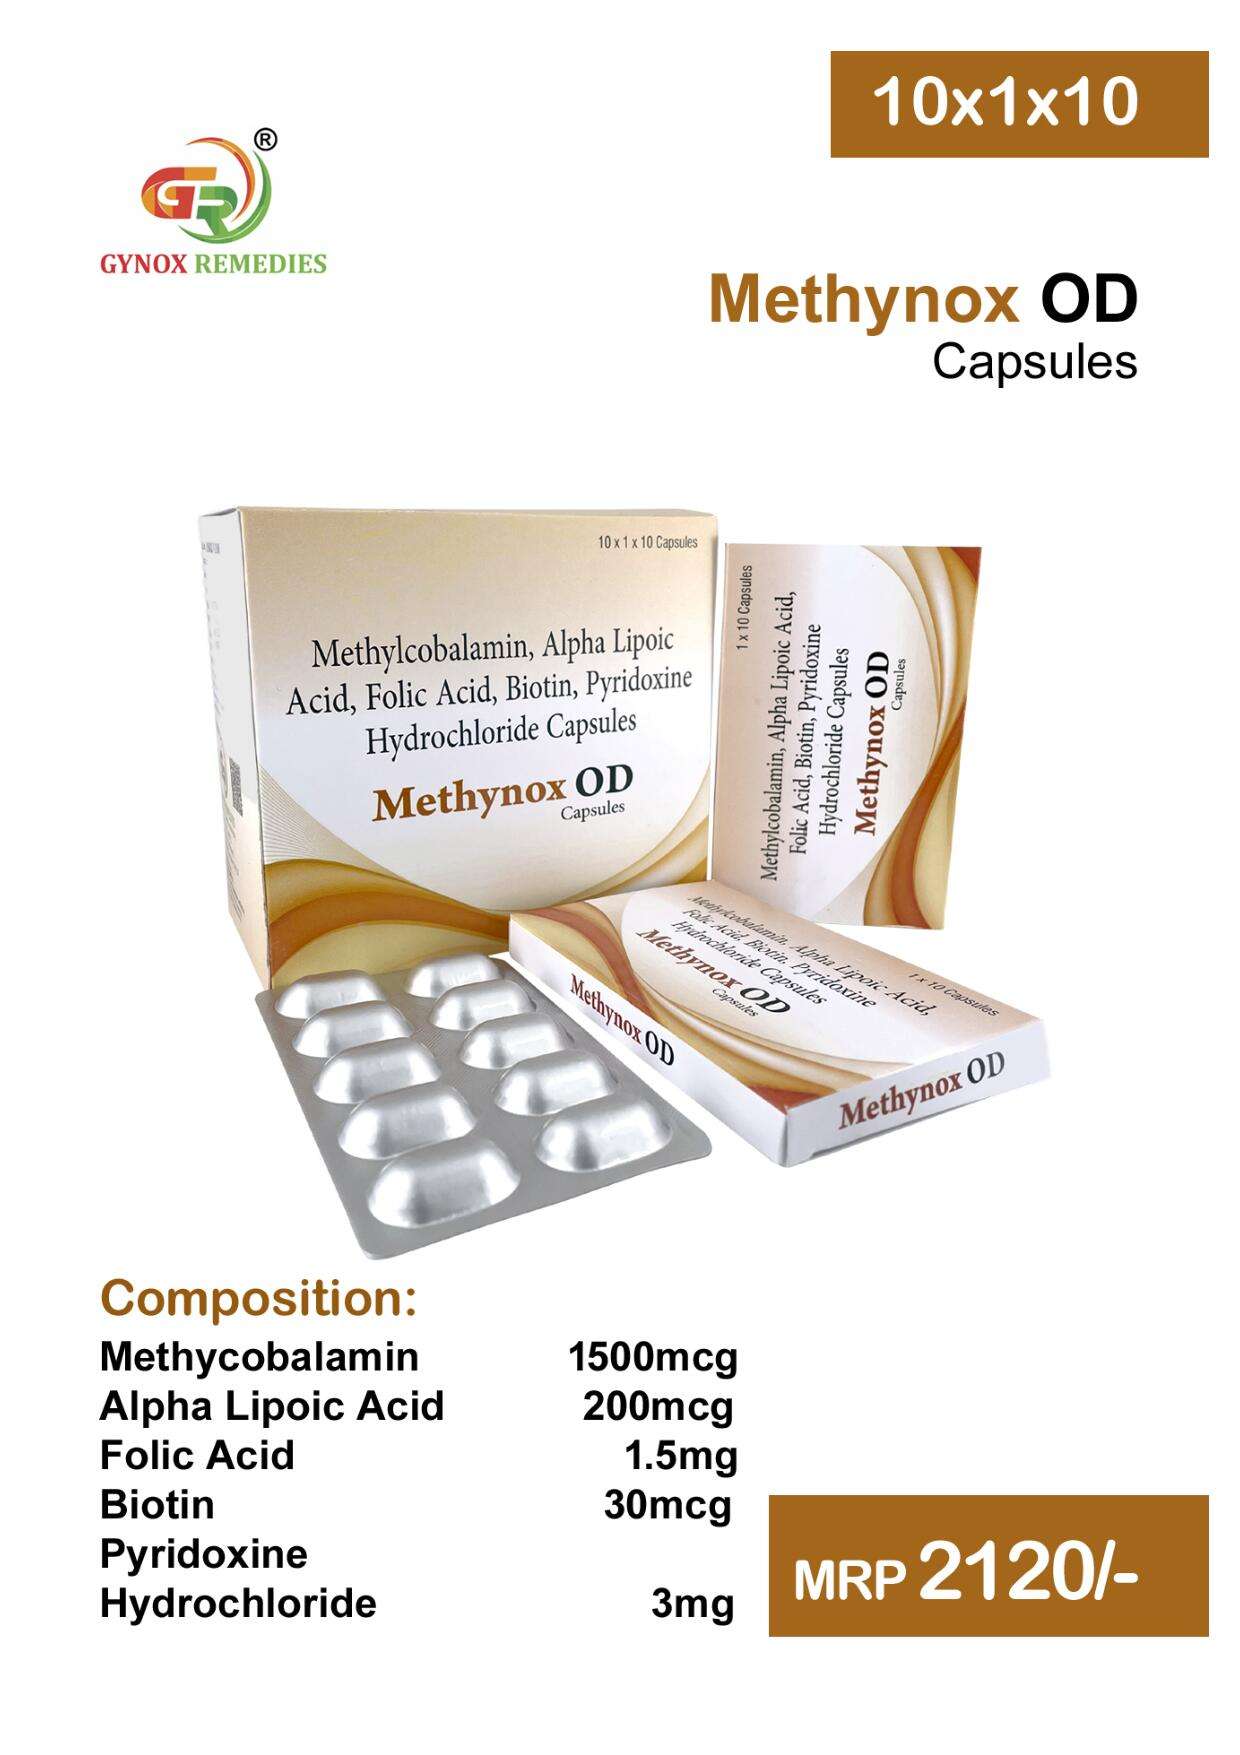 methylcobalamin 1500mcg +alpha lipoic acid 200mcg+folic acid 1.5mg
+ biotin 30mcg + pyridoxine
hydrochloride 3mg